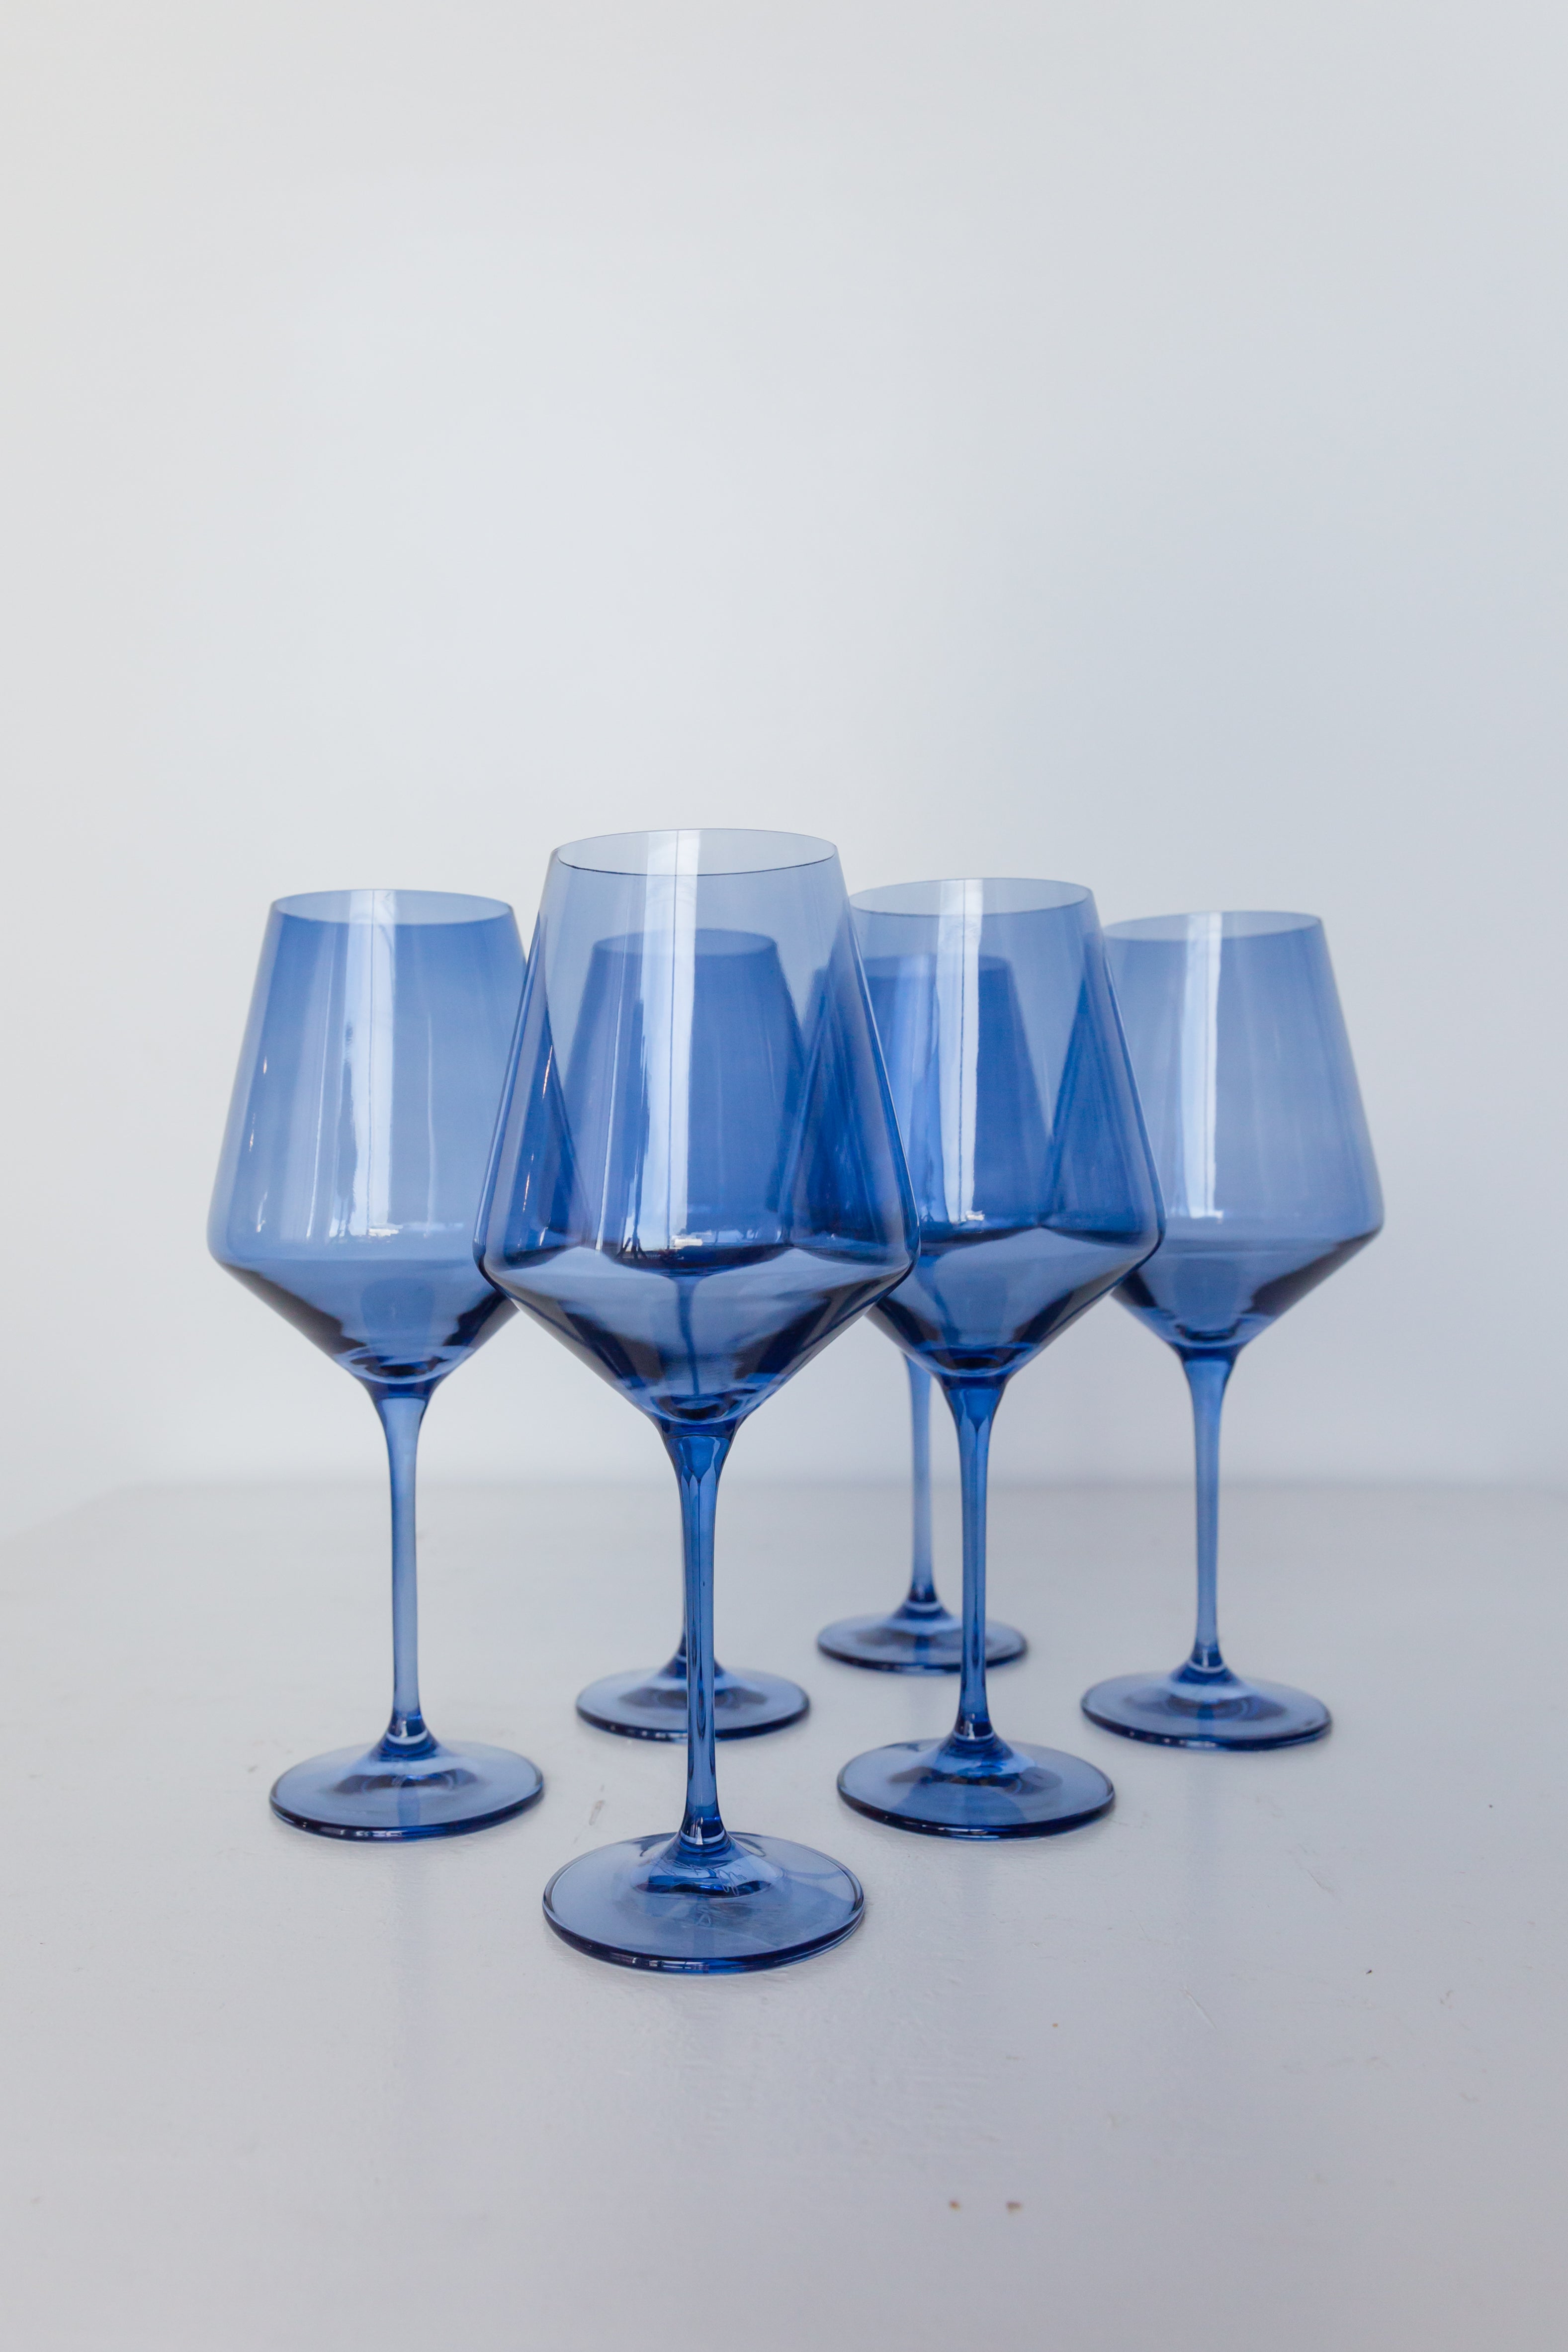 Estelle Colored Glass - Stemware Wine Glasses - Set of 6 Cobalt Blue